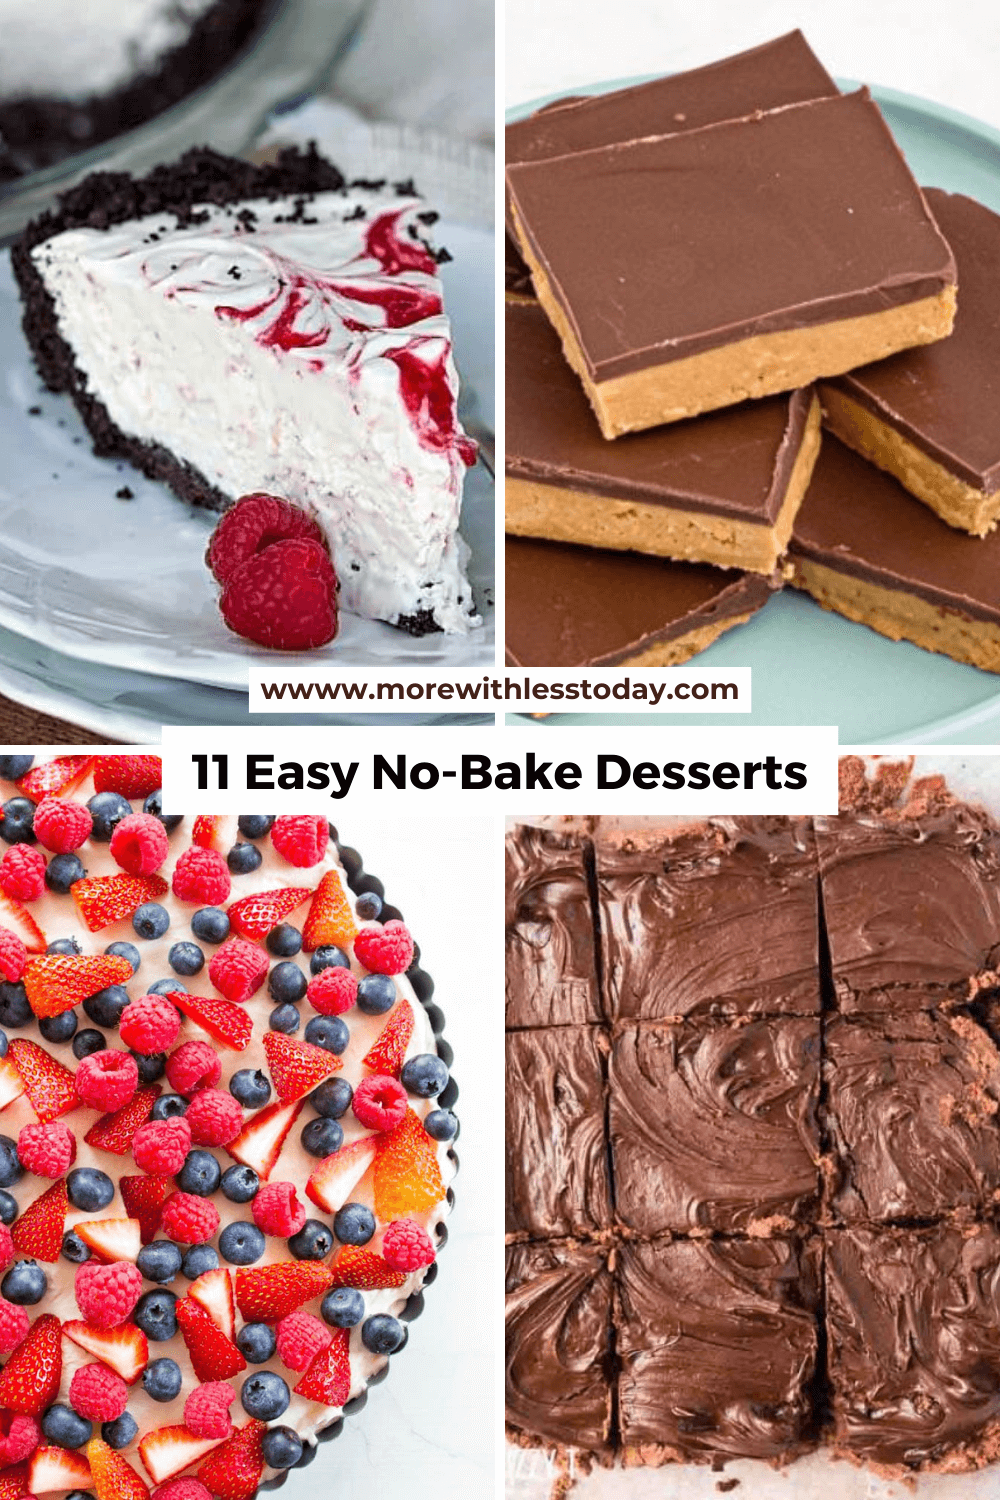 11 Easy No-Bake Desserts - PIN